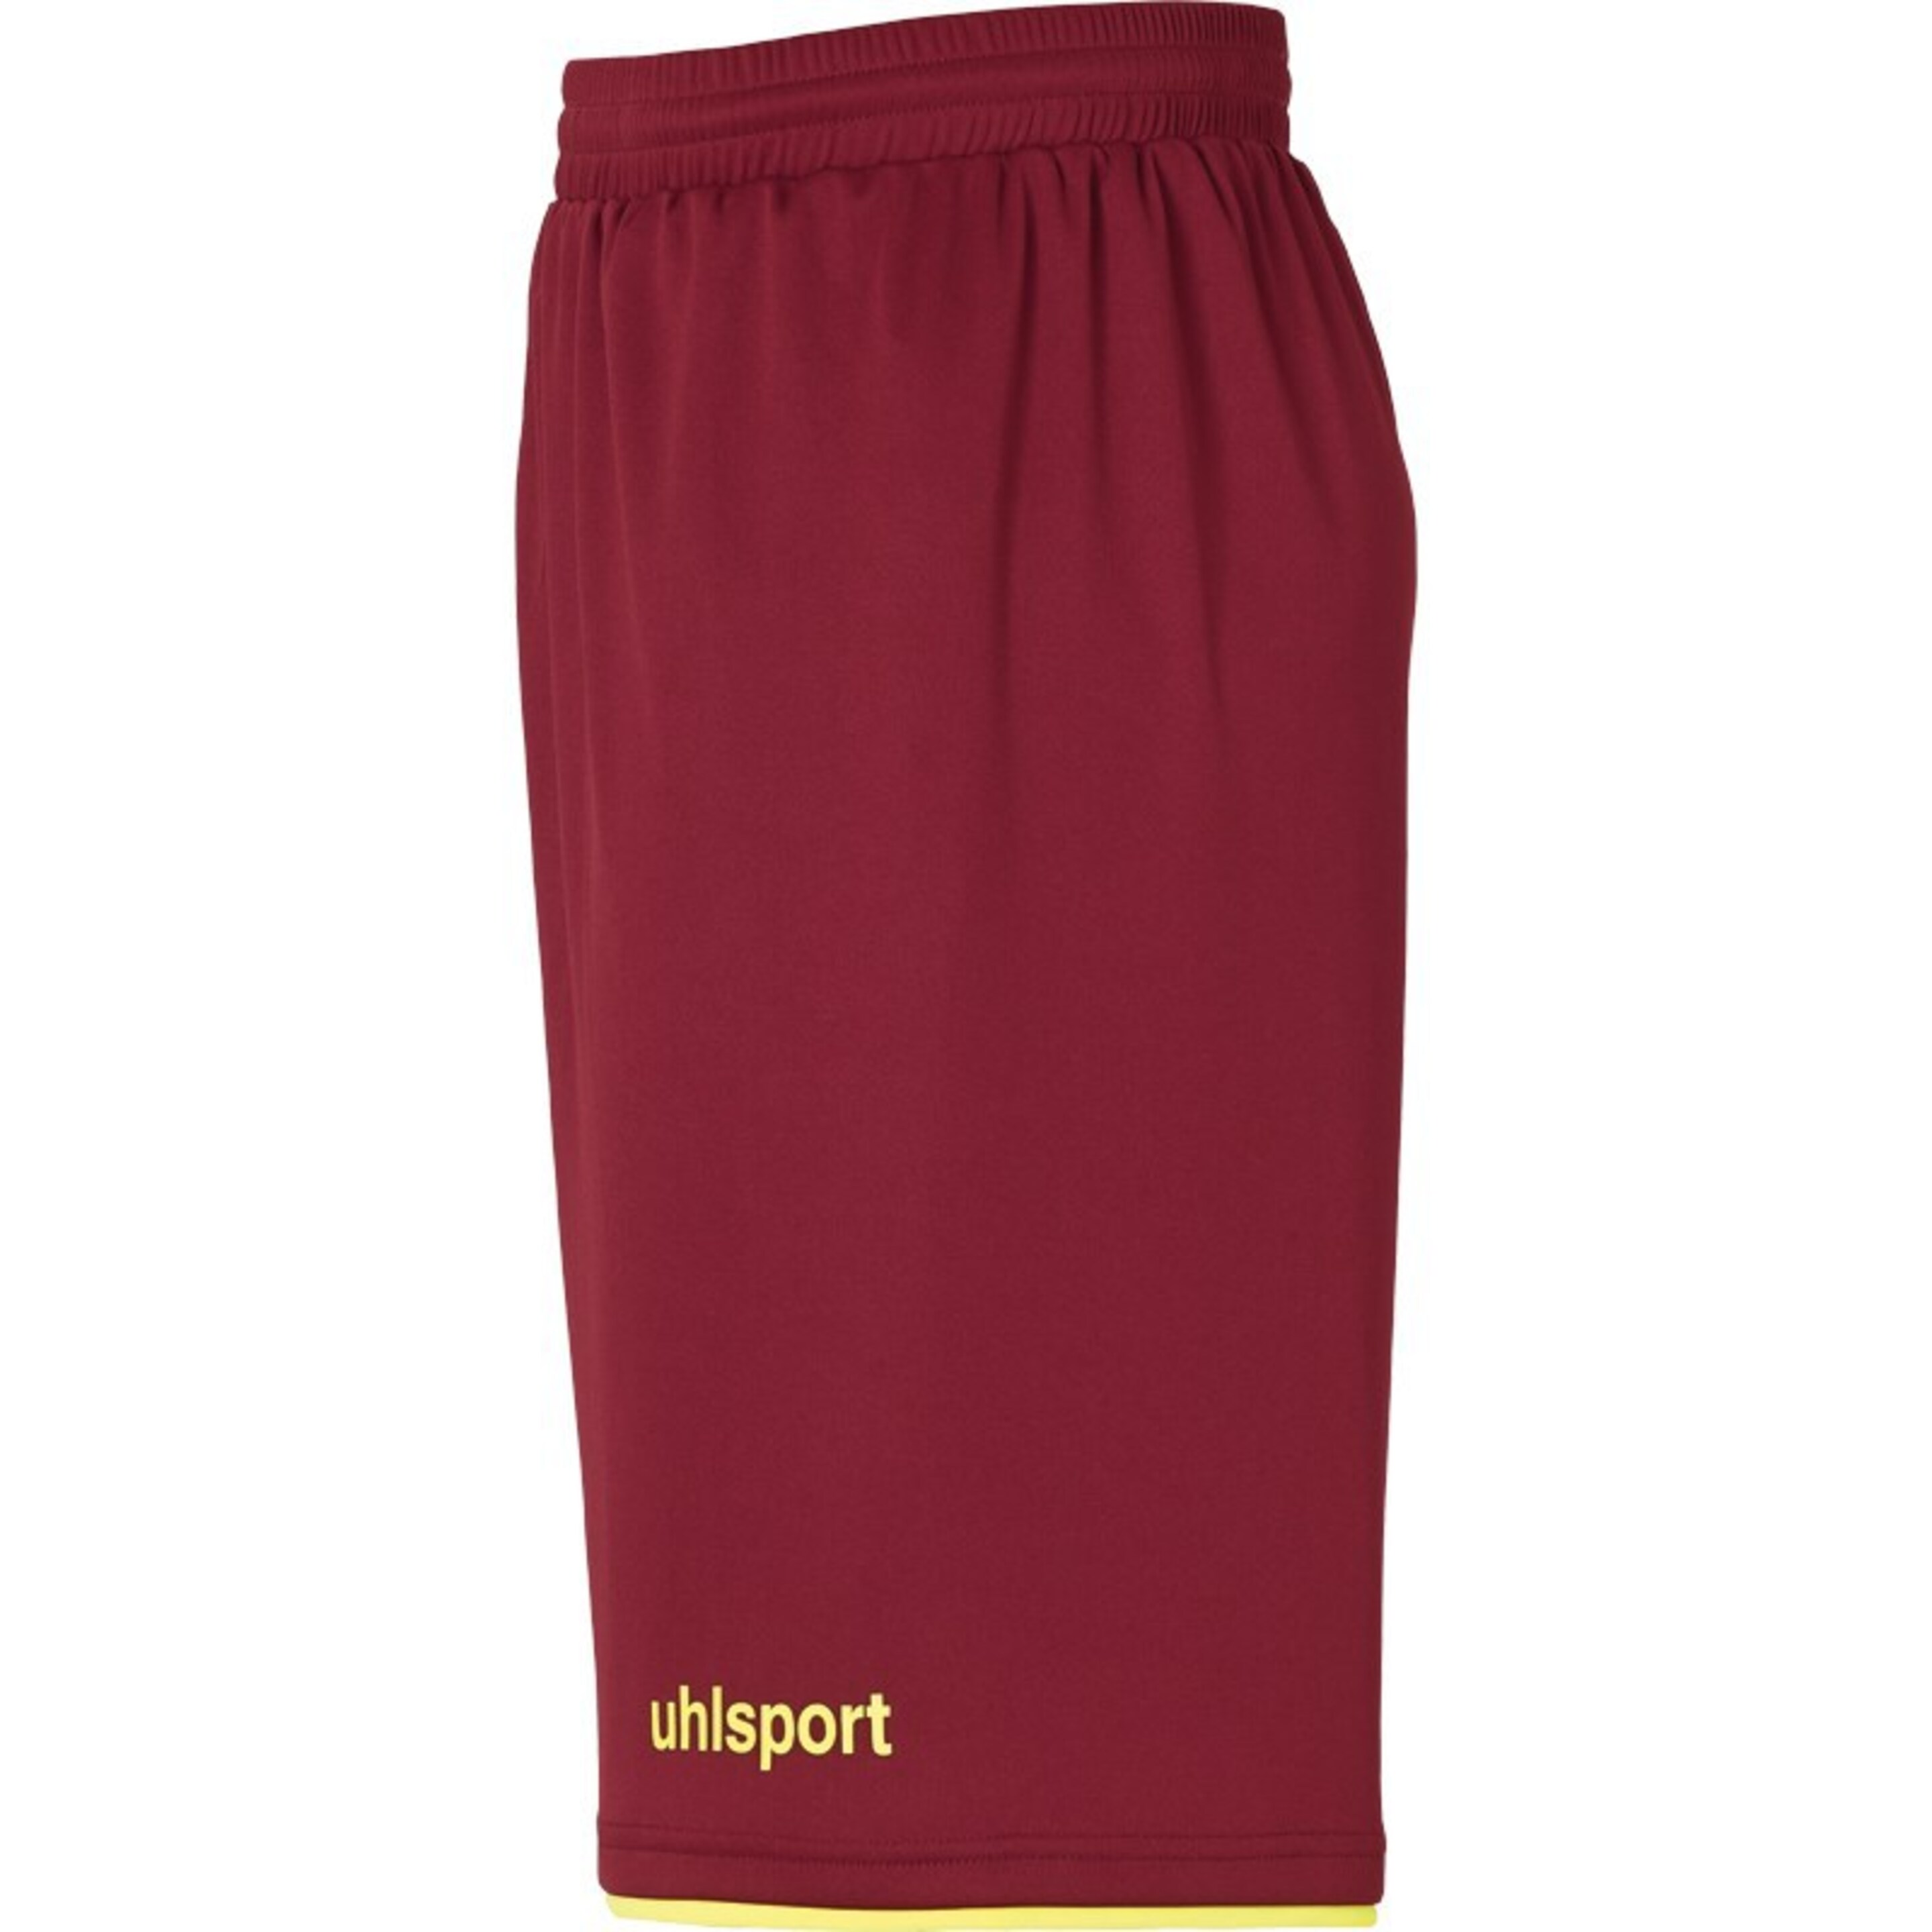 Club Shorts Burdeos/amarillo Fluor Uhlsport